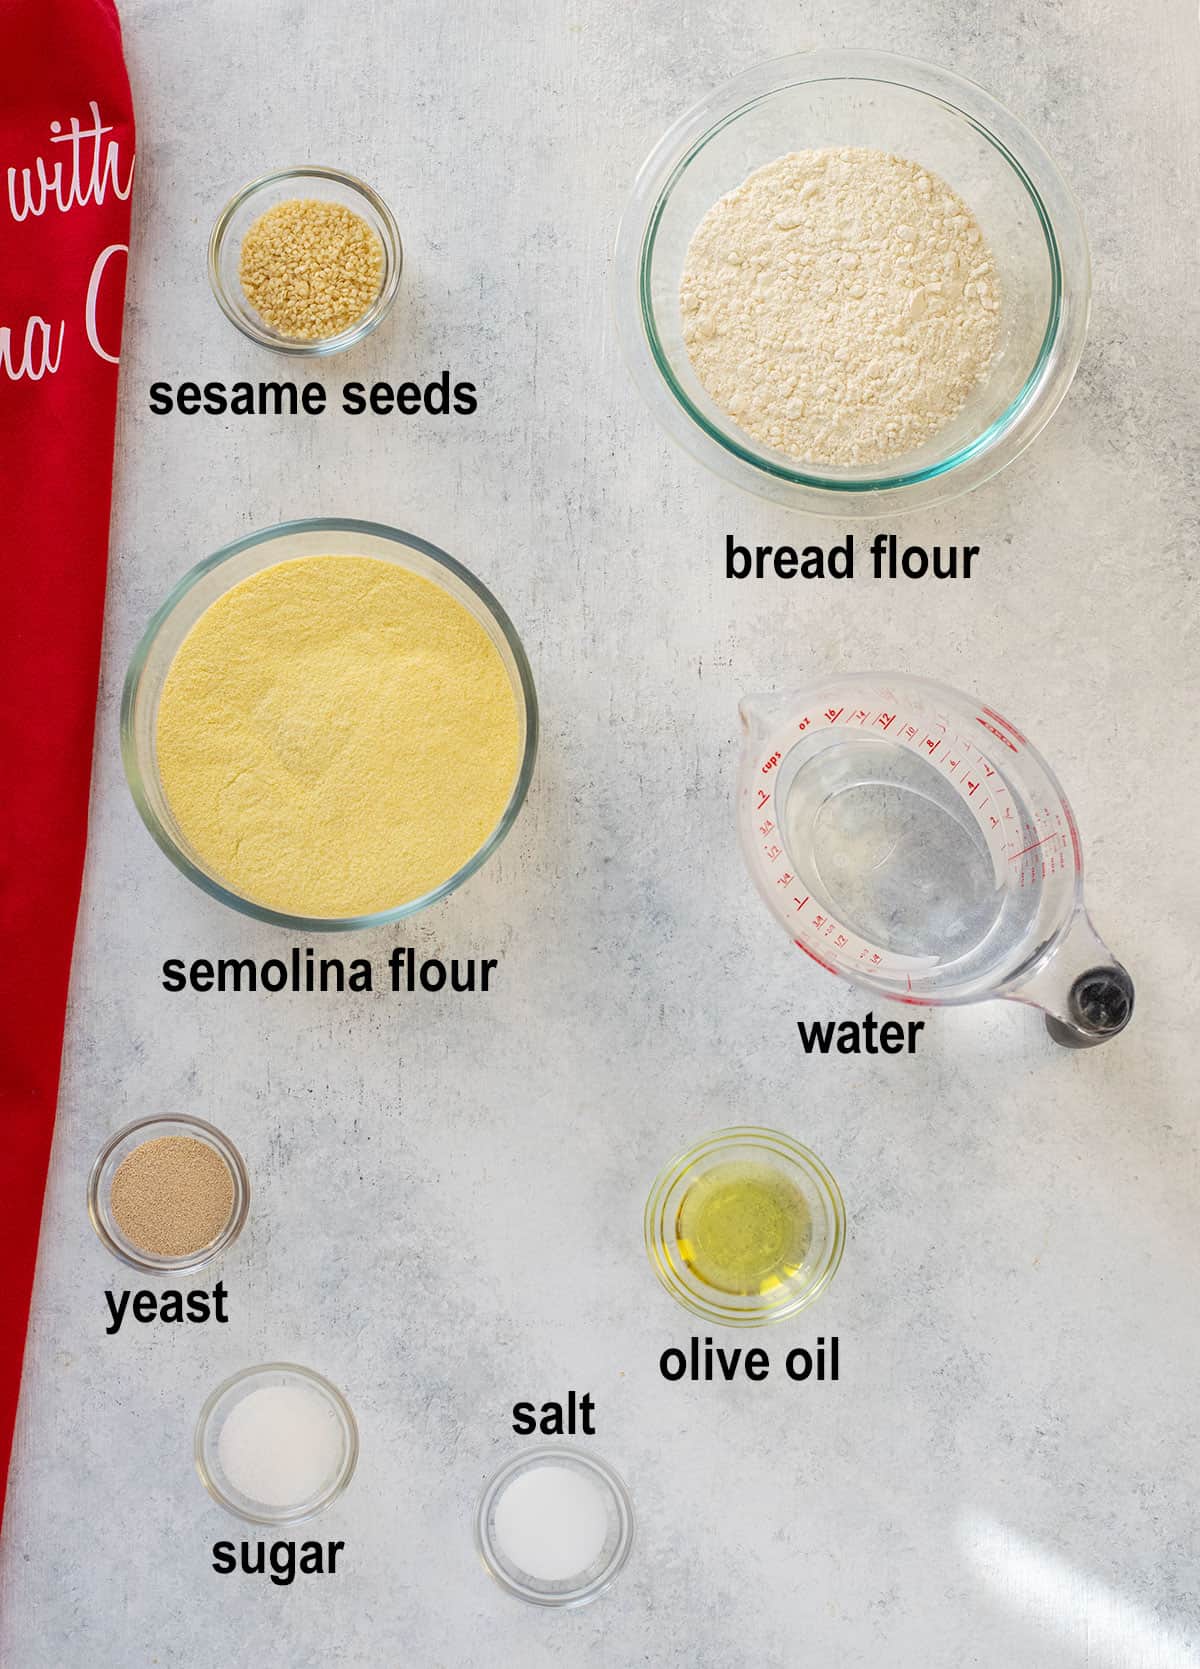 sesame seeds, bread flour, semolina flour, water, yeast, olive oil, sugar, salt